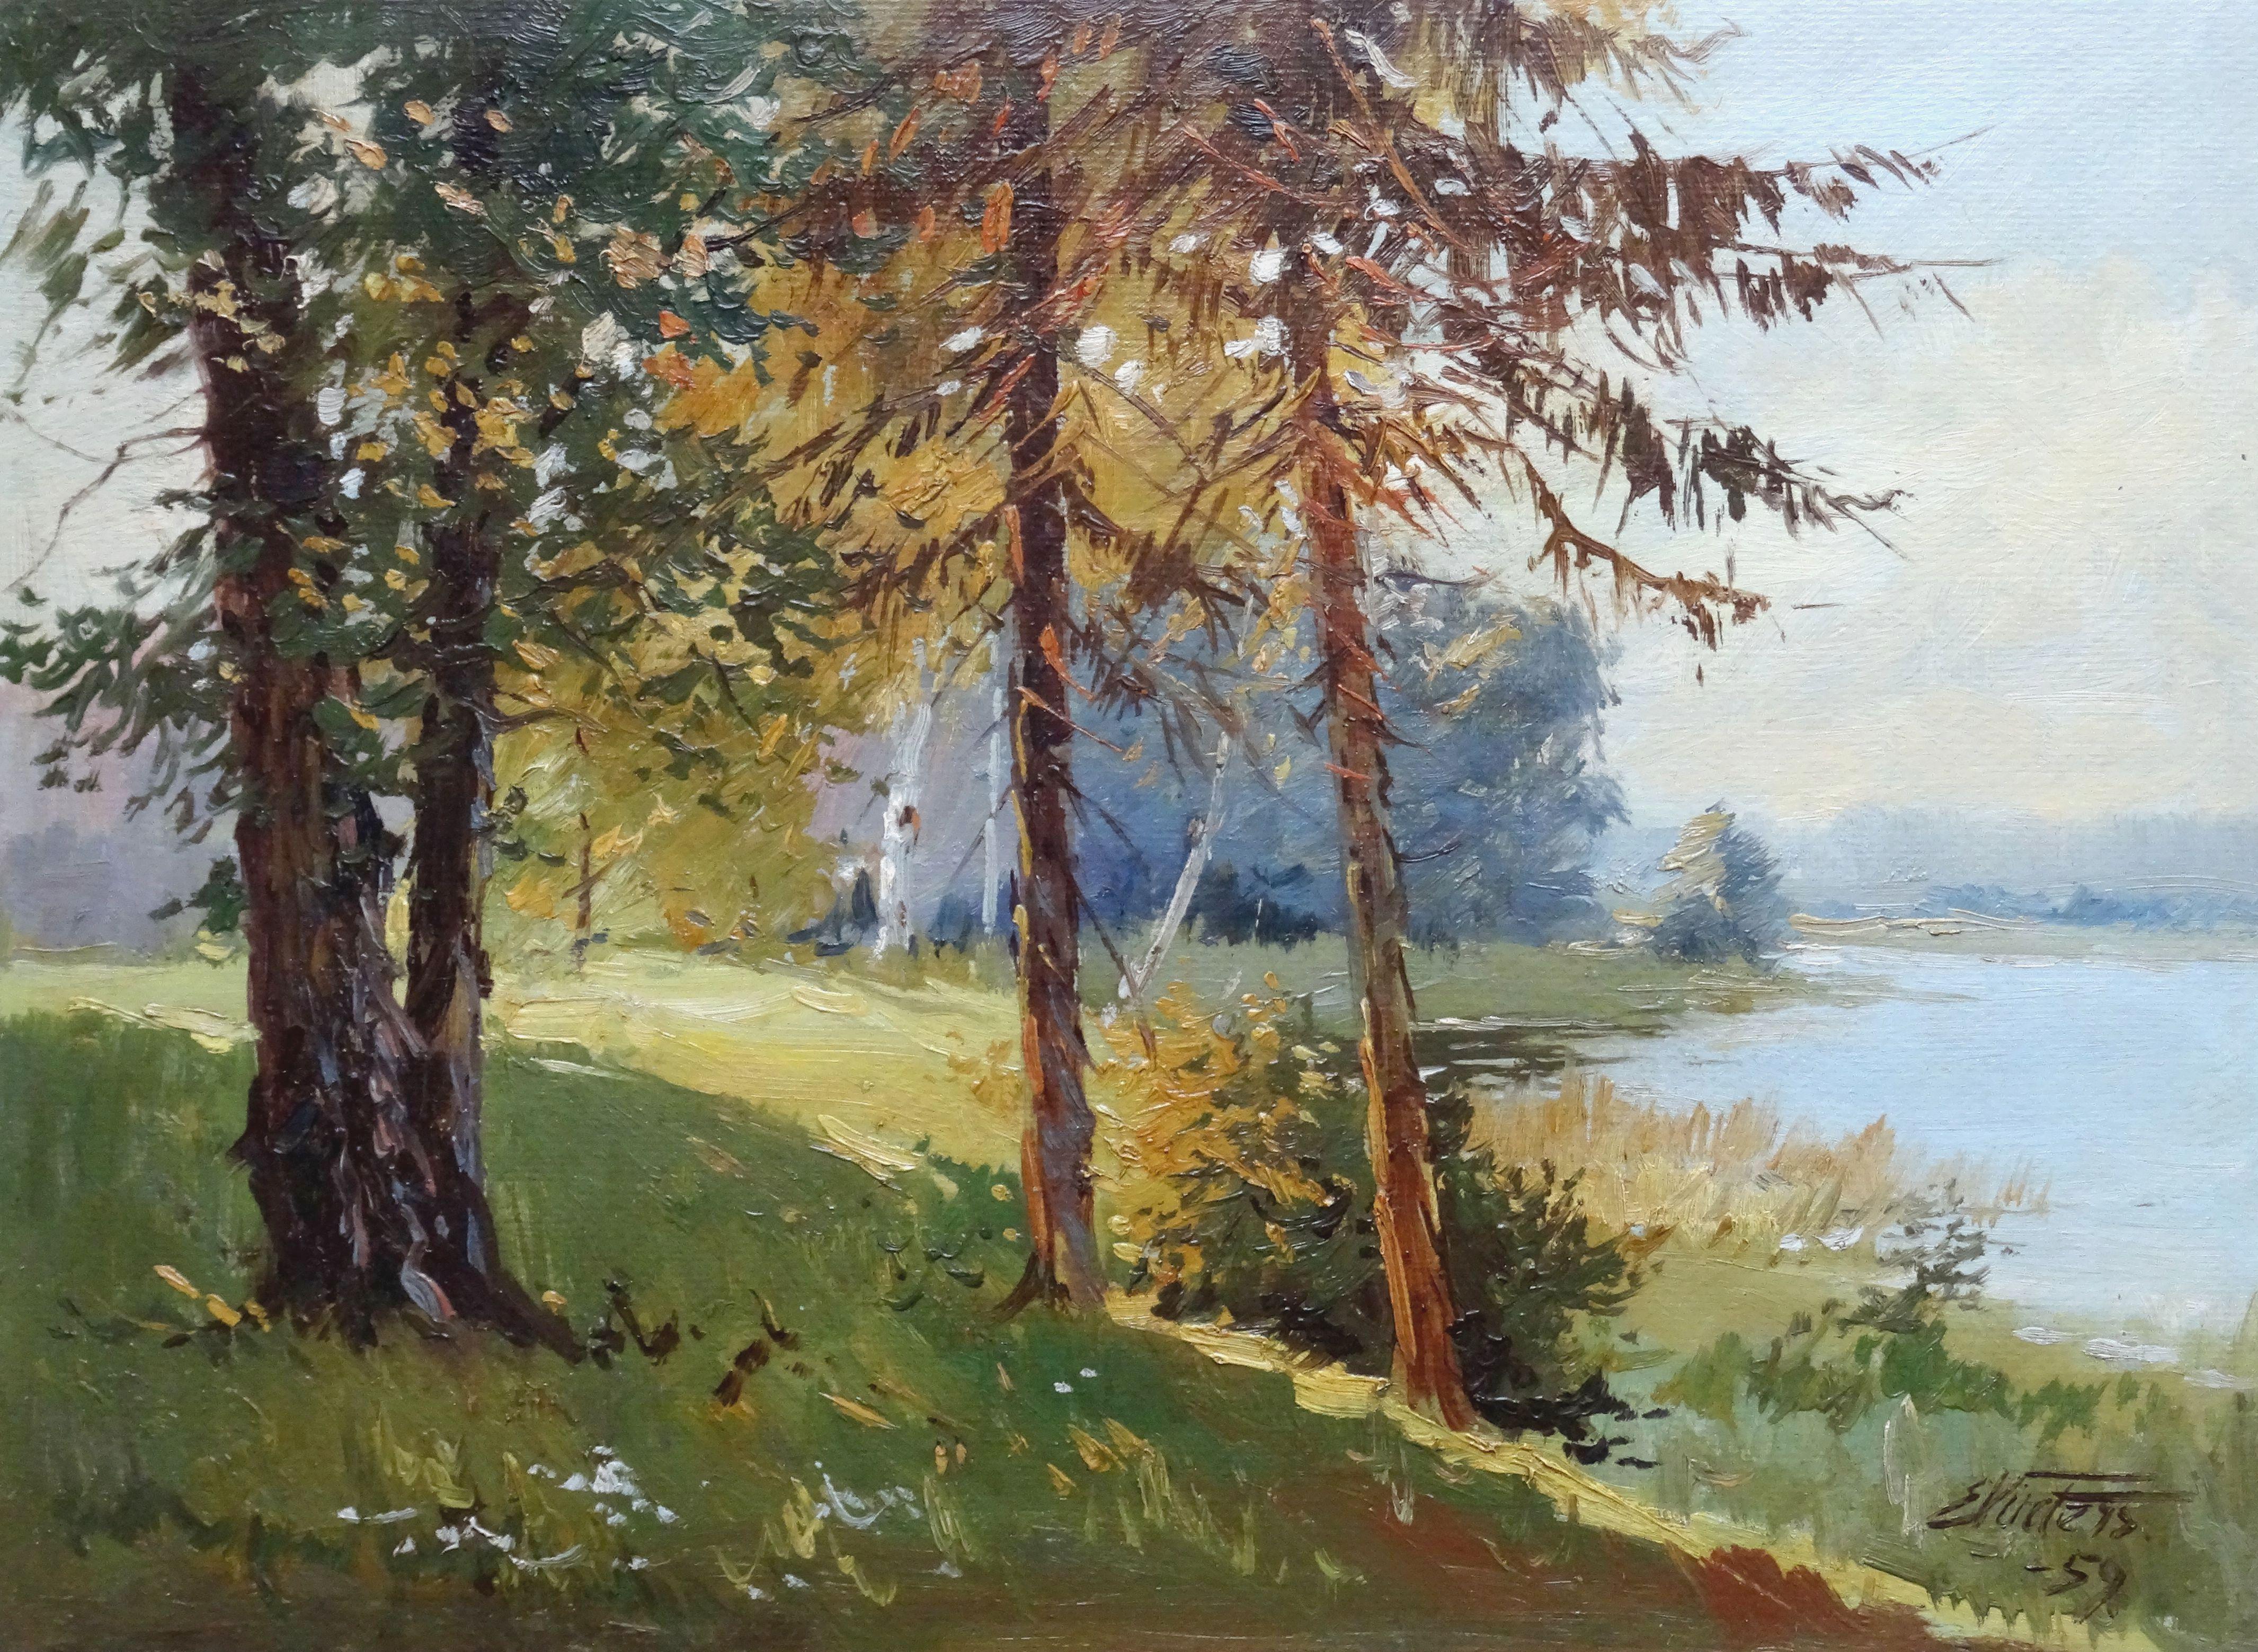 Lakeside. 1959, huile sur carton, 36 x 49,5 cm